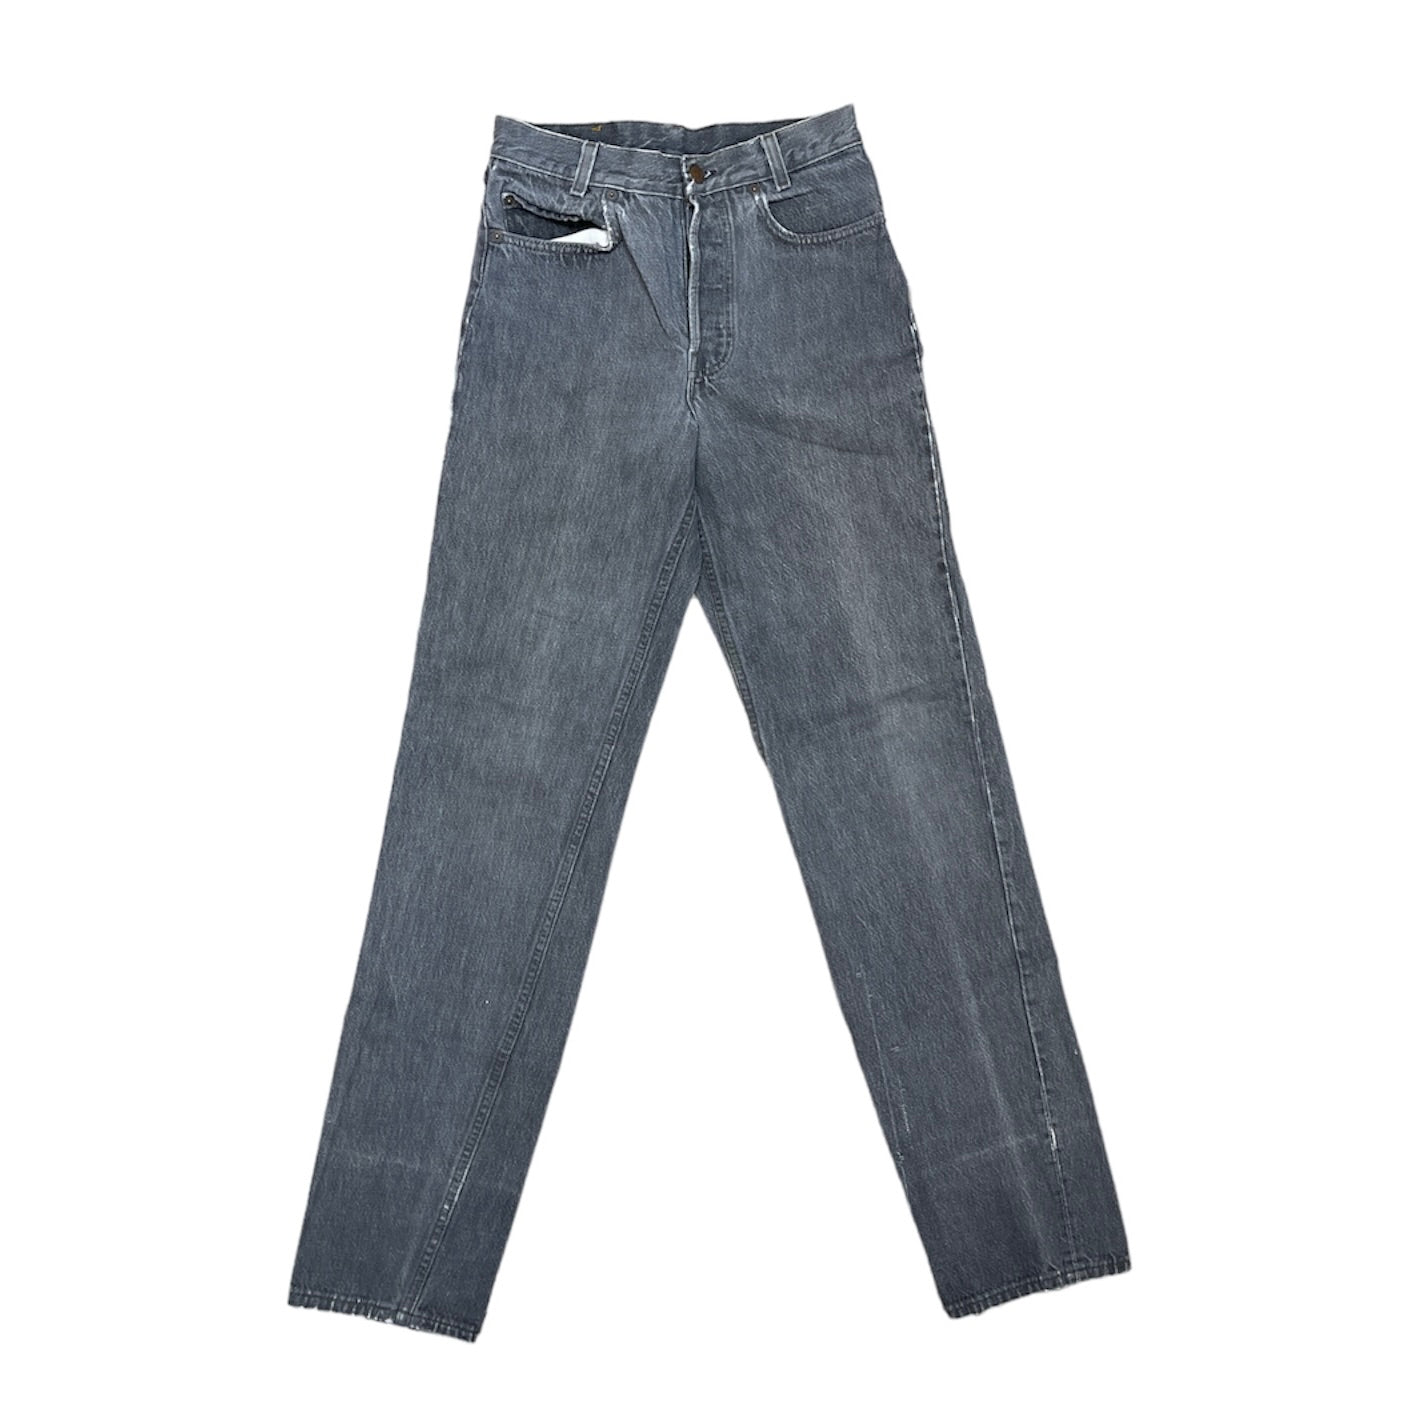 Vintage Levis 701 Vintage Grey Jeans (W28/L34)